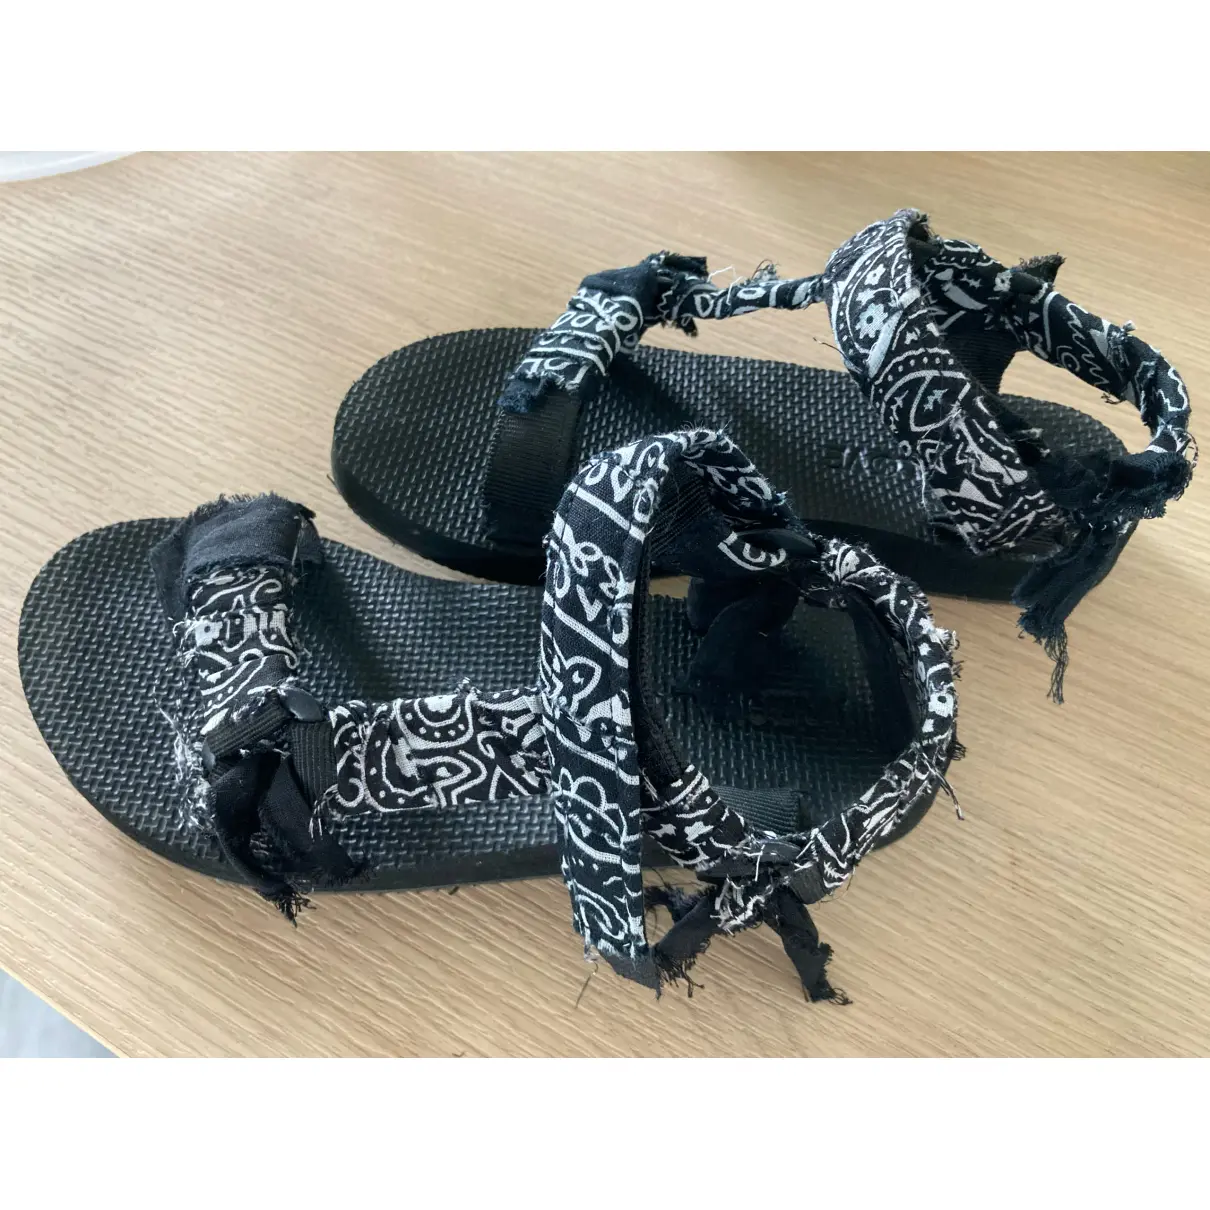 Buy ARIZONA LOVE Cloth sandals online